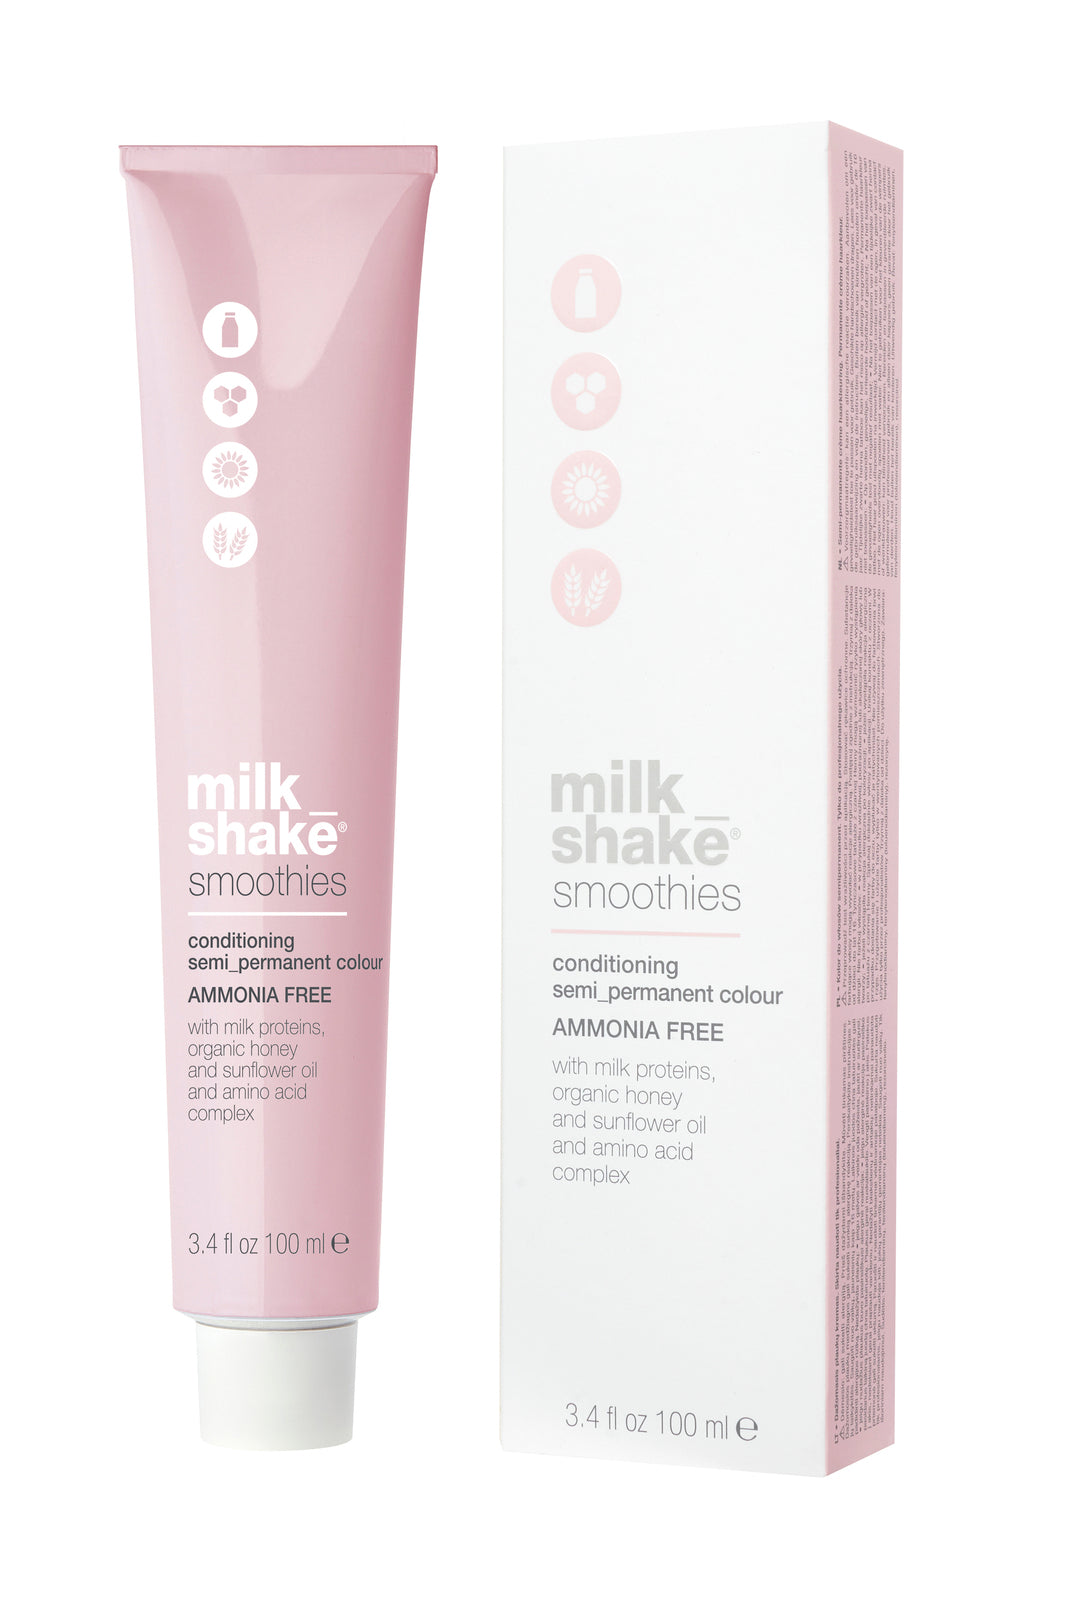 Milkshake smoothies semi-permanent color 6.43